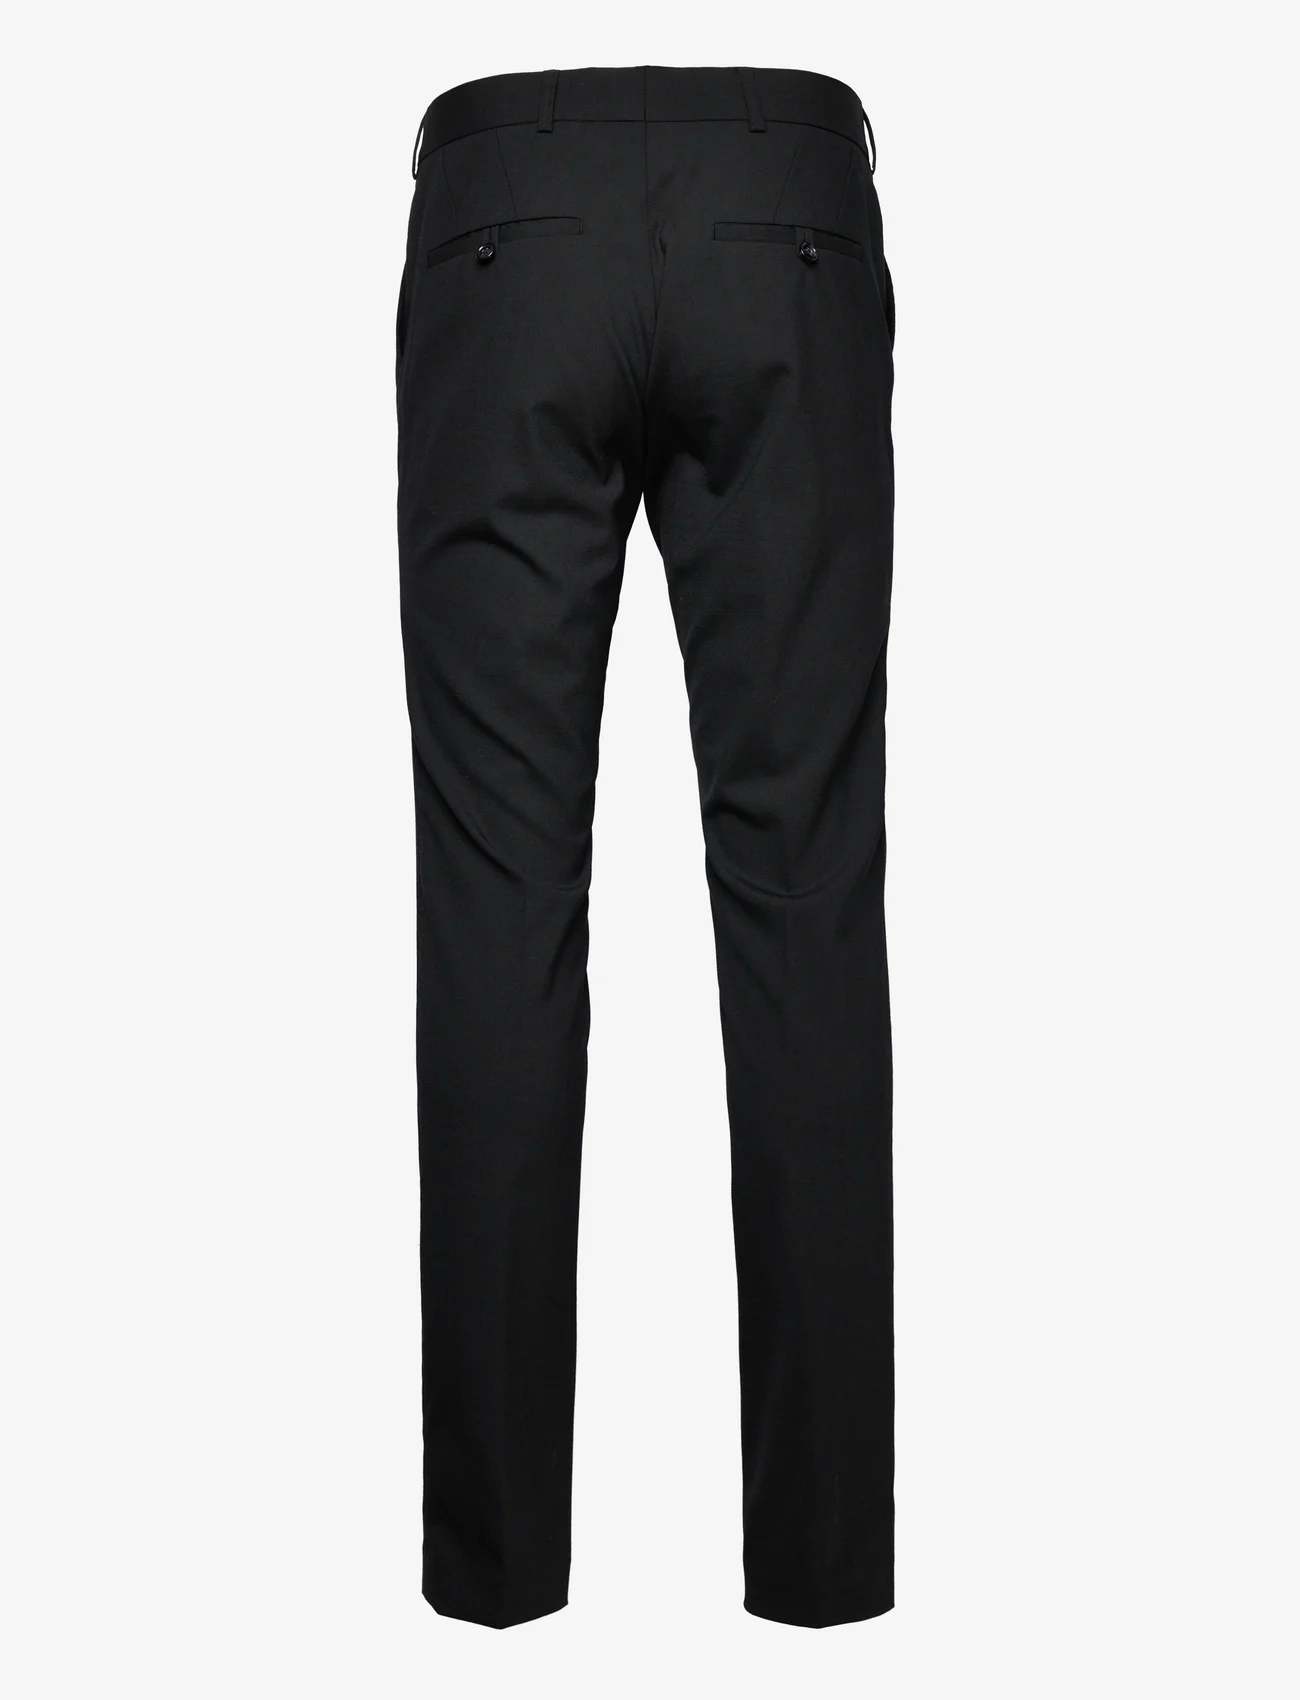 Bertoni - Knudsen - pantalons habillés - 997 jet black - 1